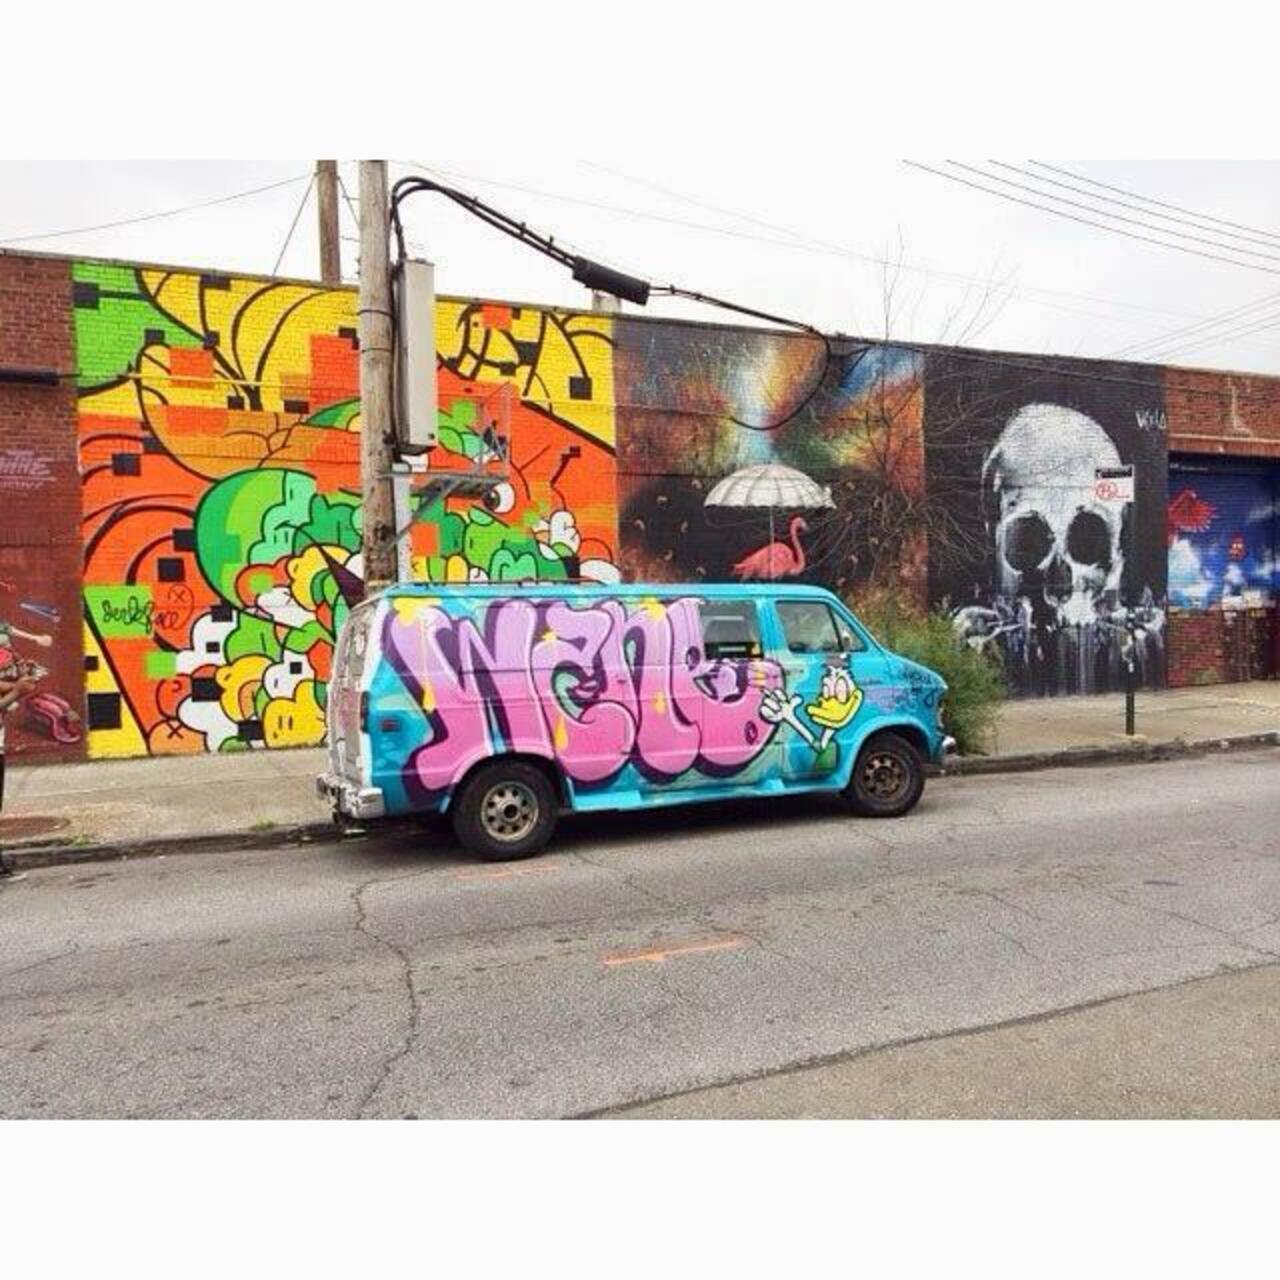 I saw this van in #brooklyn . Does anyone know of the #artist ? #streetart #graffiti http://t.co/YbrAq6pvmc